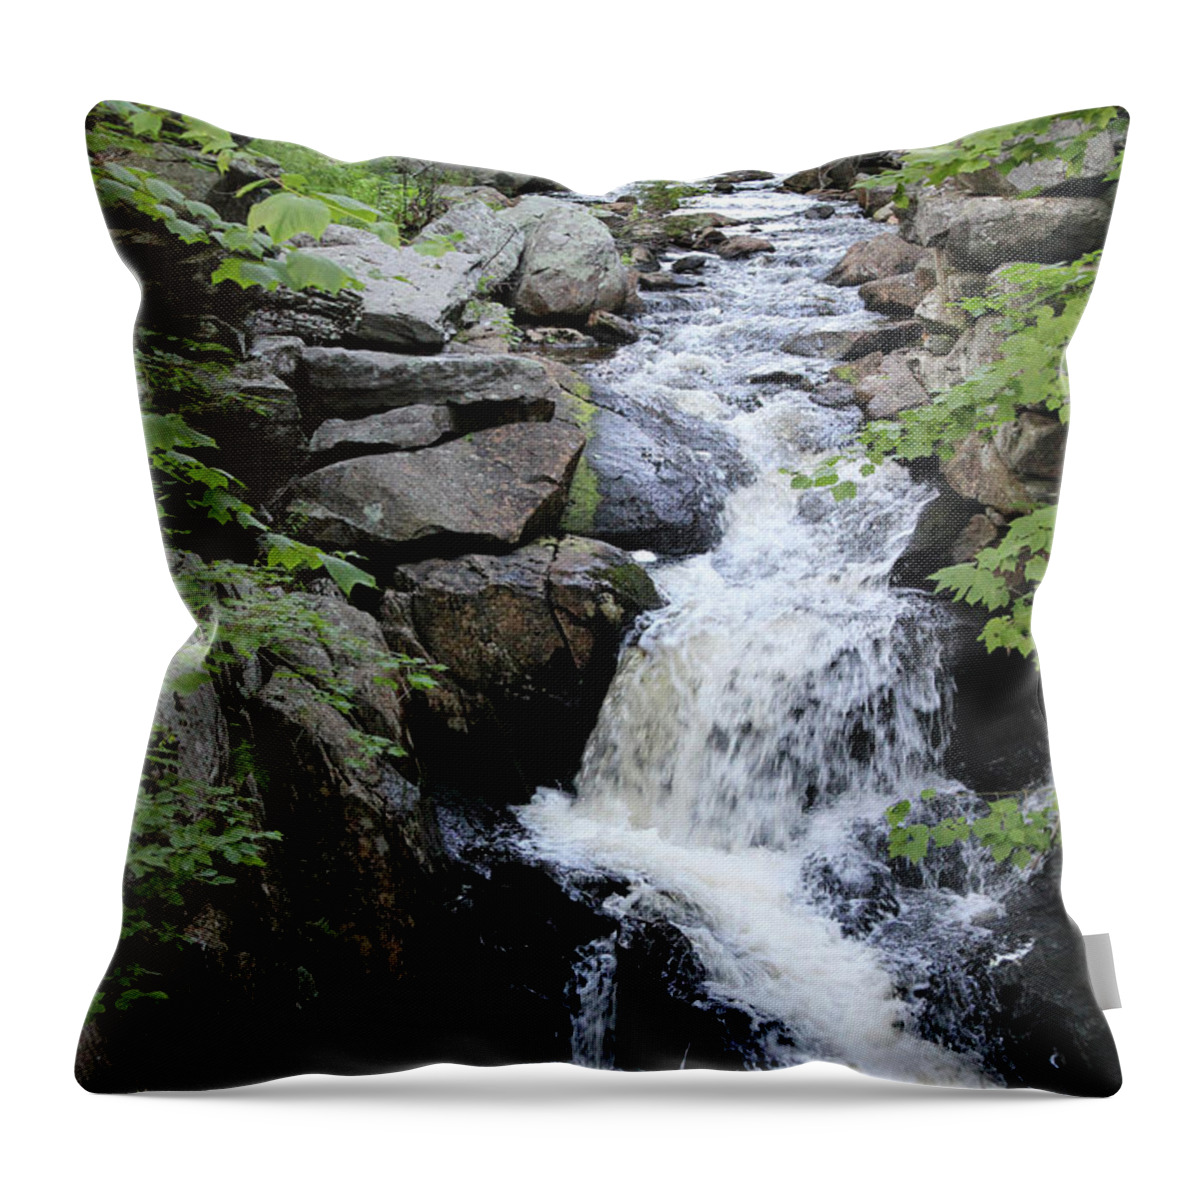 Pillsbury Throw Pillow featuring the photograph Waterfall Pillsbury State Park by Samantha Delory